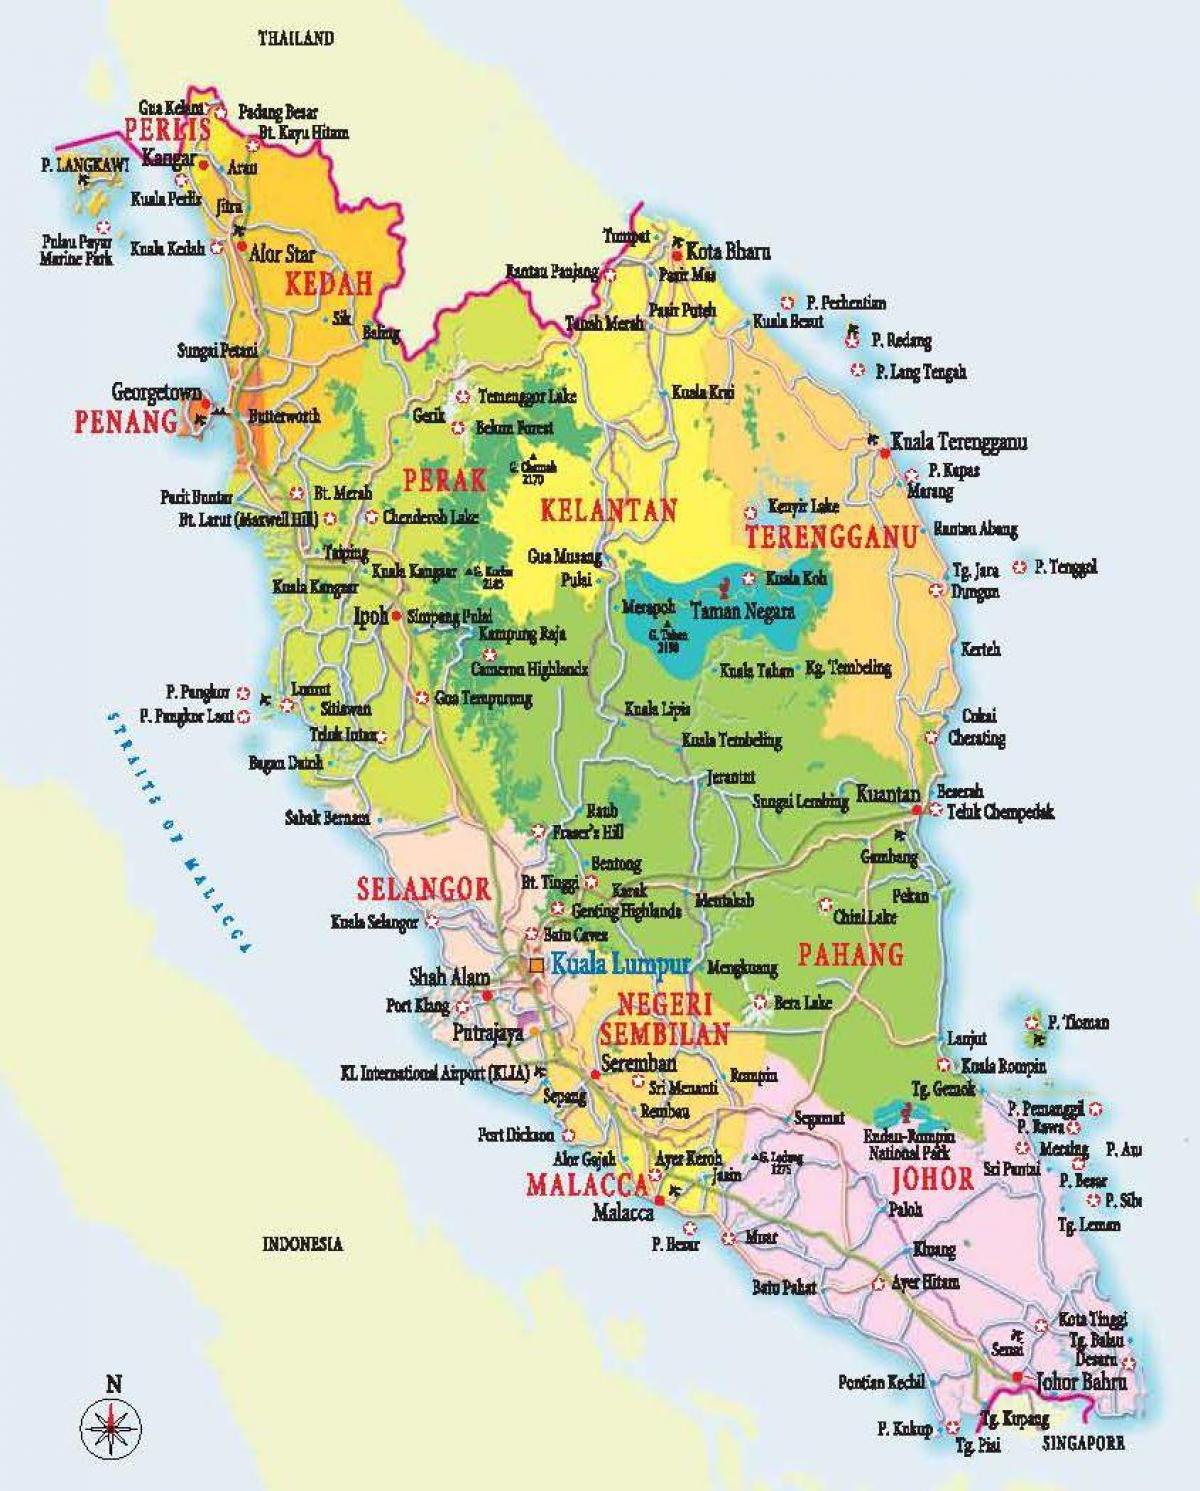 kort over det vestlige malaysia